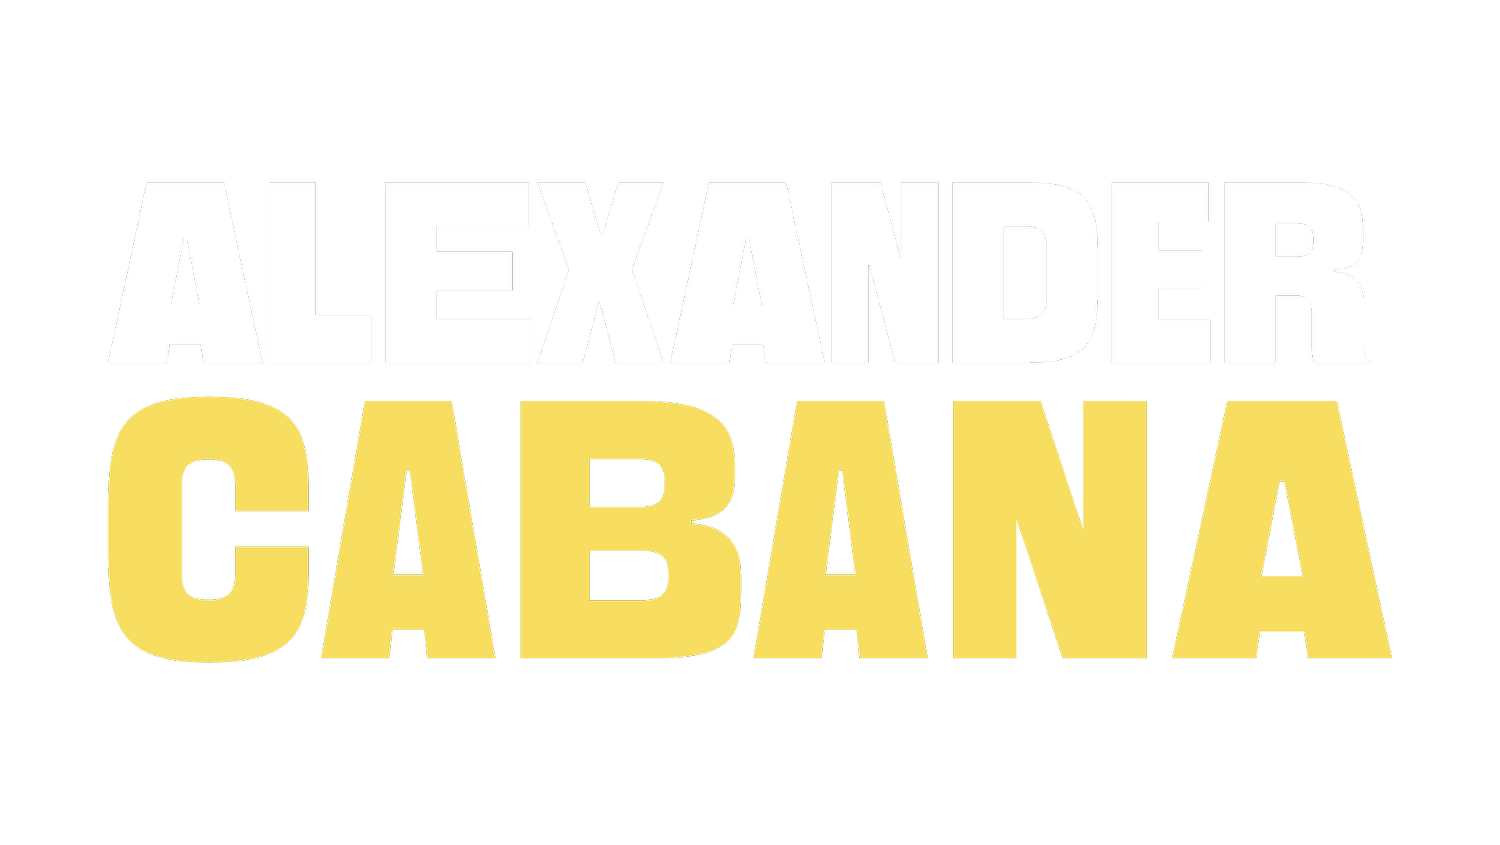 Alexander Cabana